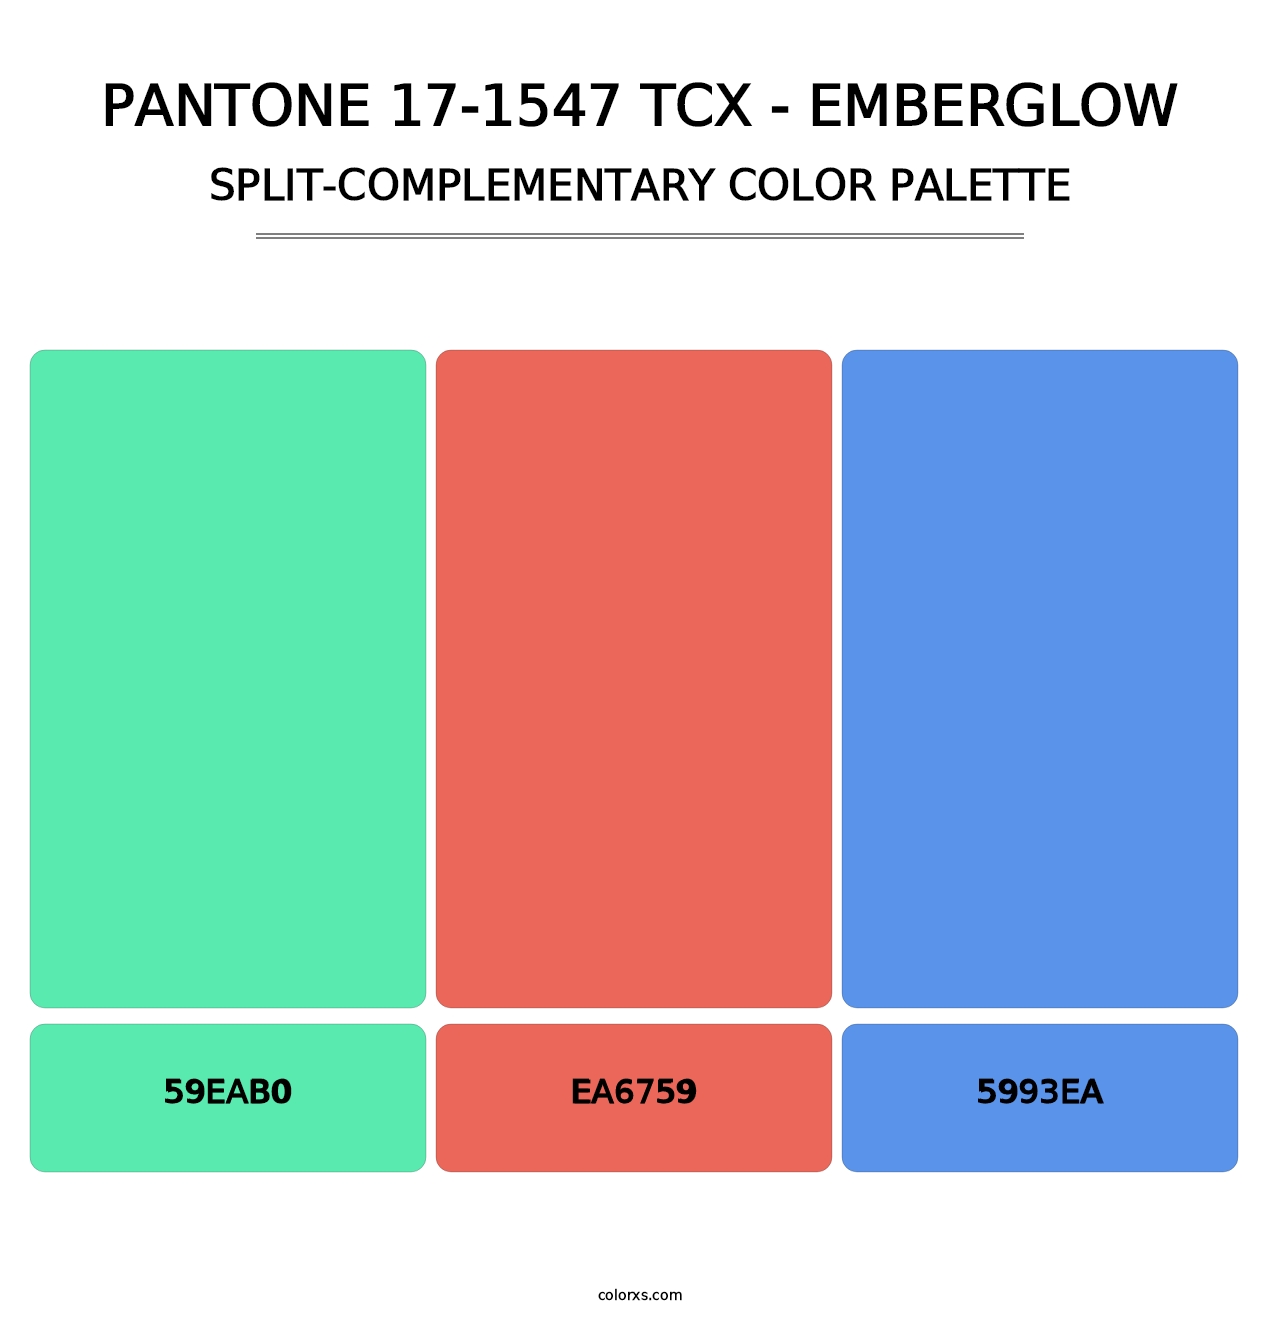 PANTONE 17-1547 TCX - Emberglow - Split-Complementary Color Palette